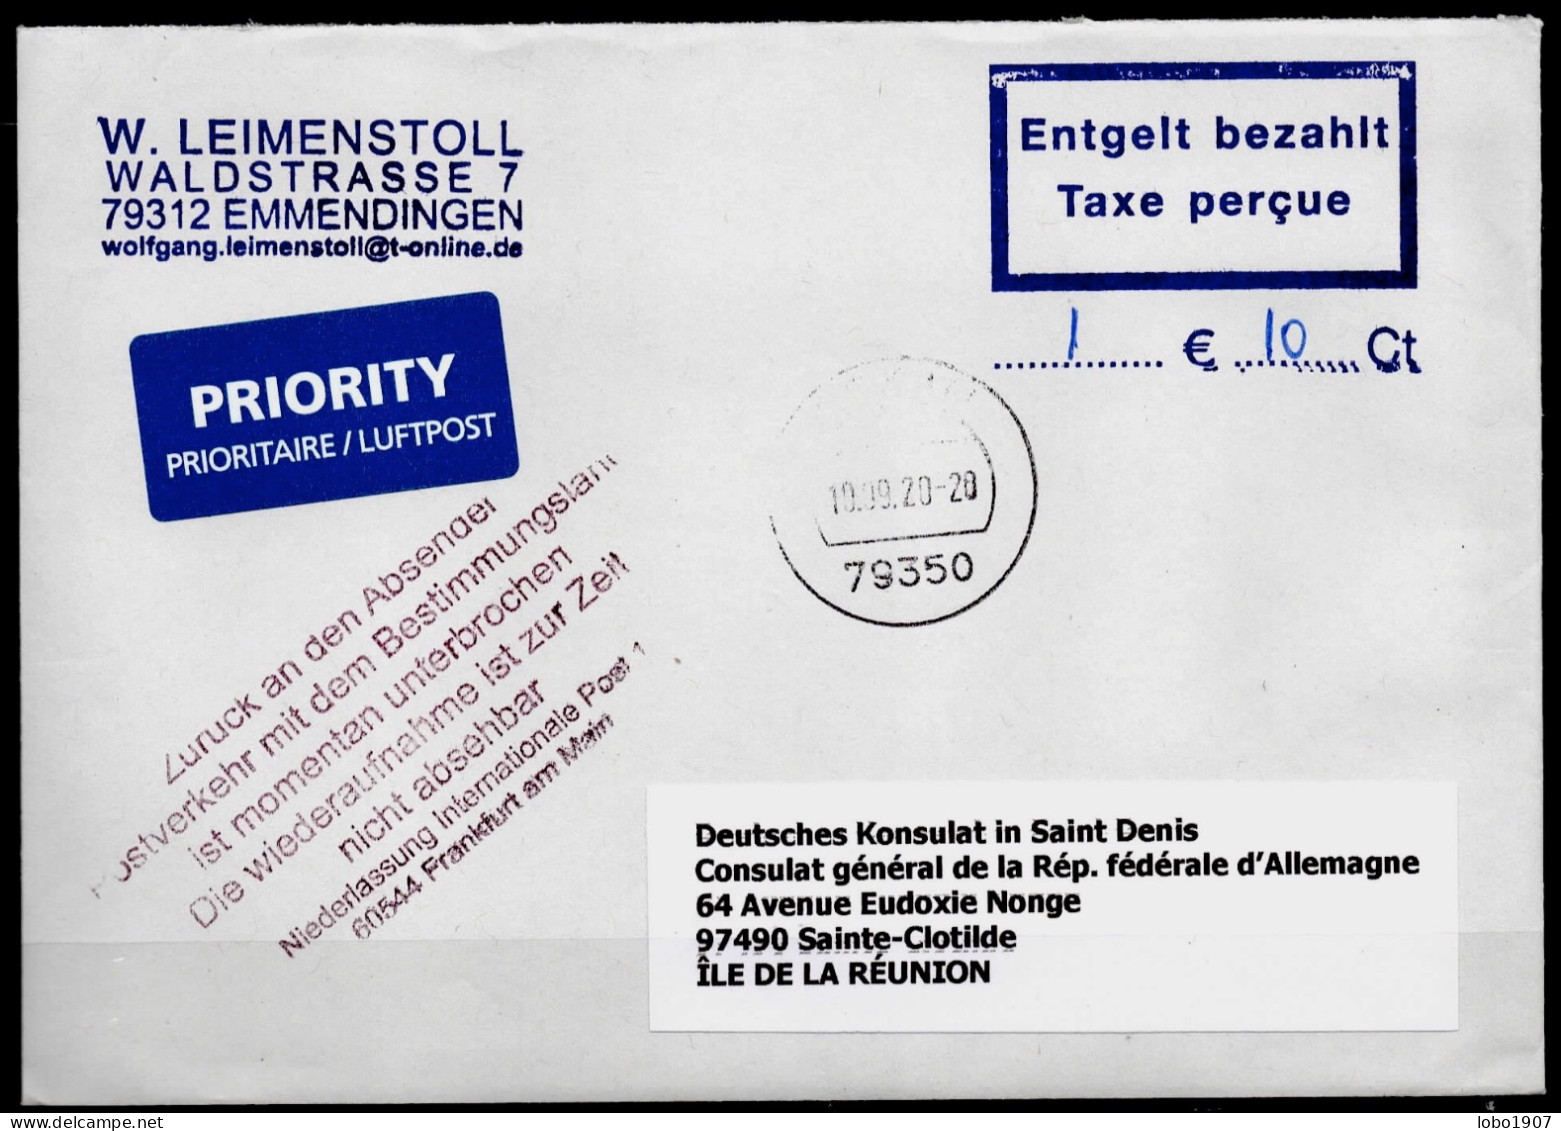 Corona Covid 19 Postal Service Interruption "Zurück An Den Absender... " Reply Coupon Paid Cover To LA REUNION - Krankheiten